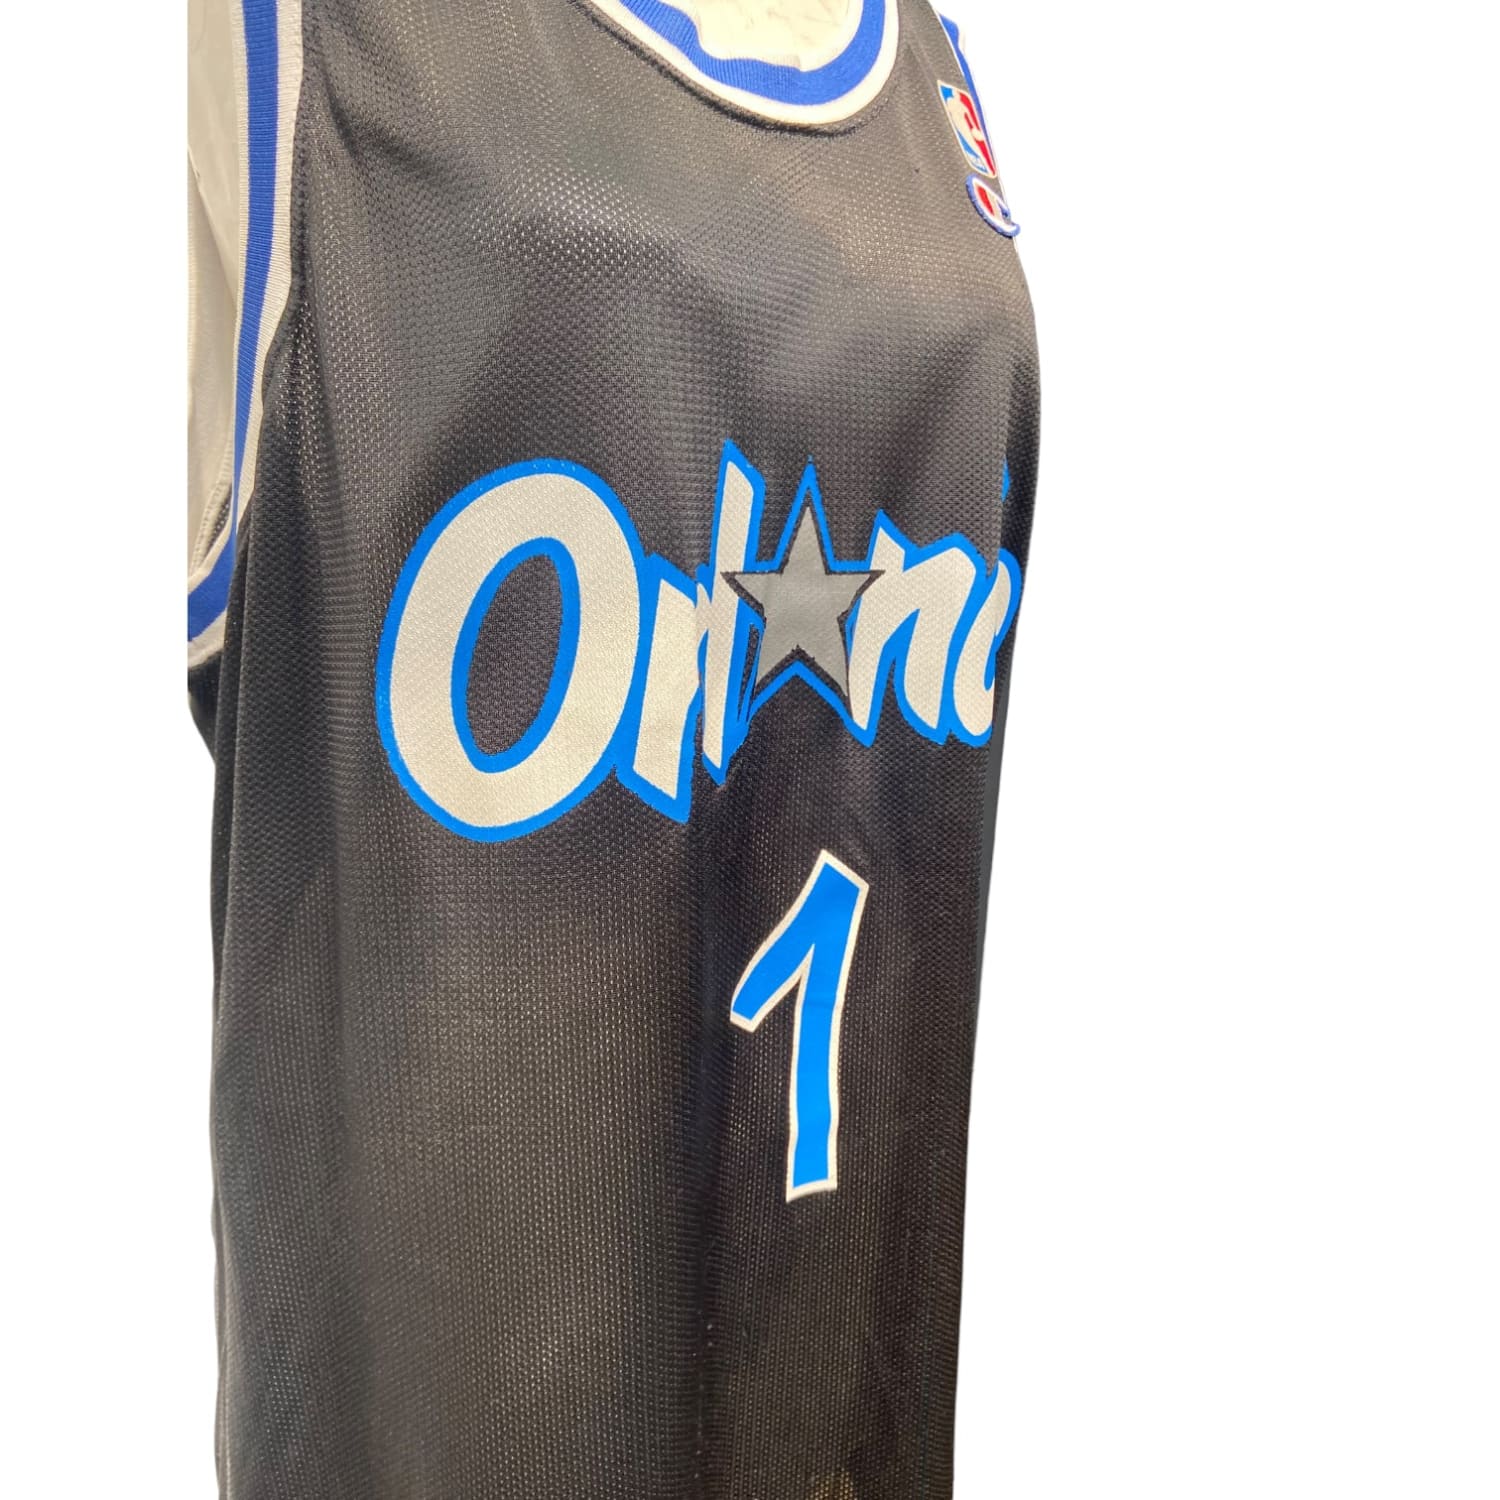 Vintage Orlando Hardway Basketball Jersey Vintage -